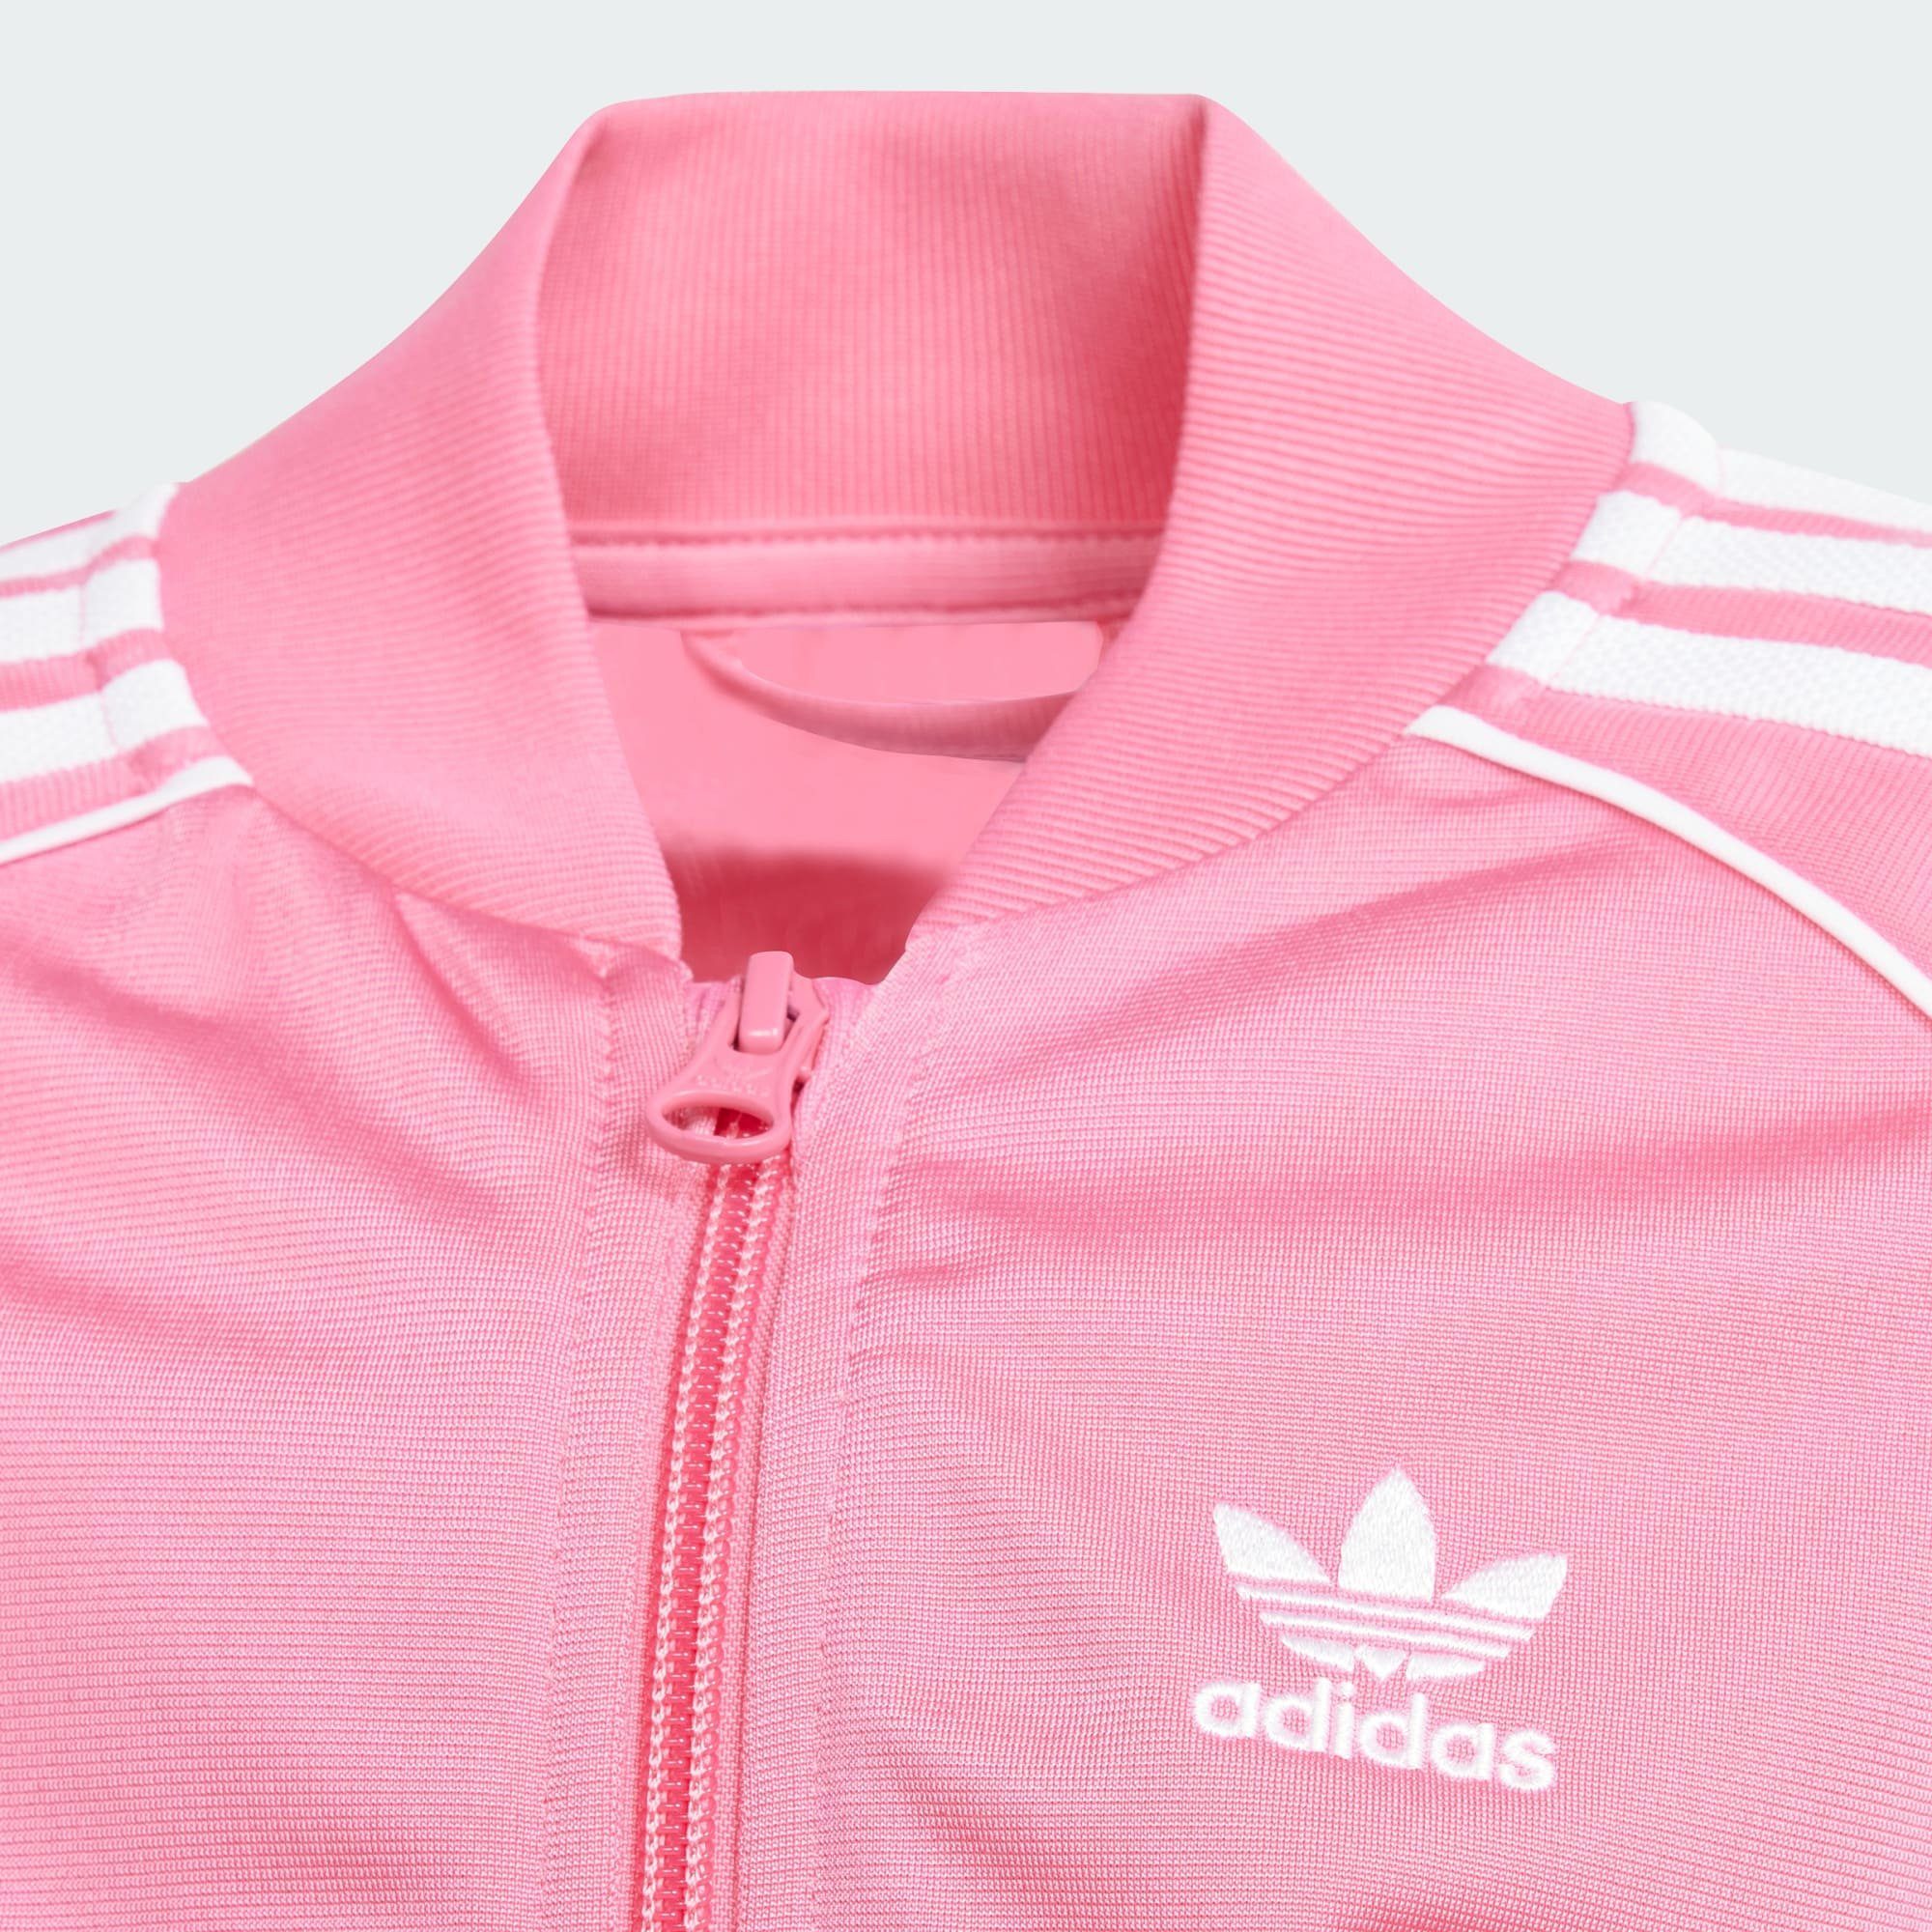 Sportanzug SST Fusion TRAININGSANZUG ADICOLOR Pink adidas Originals